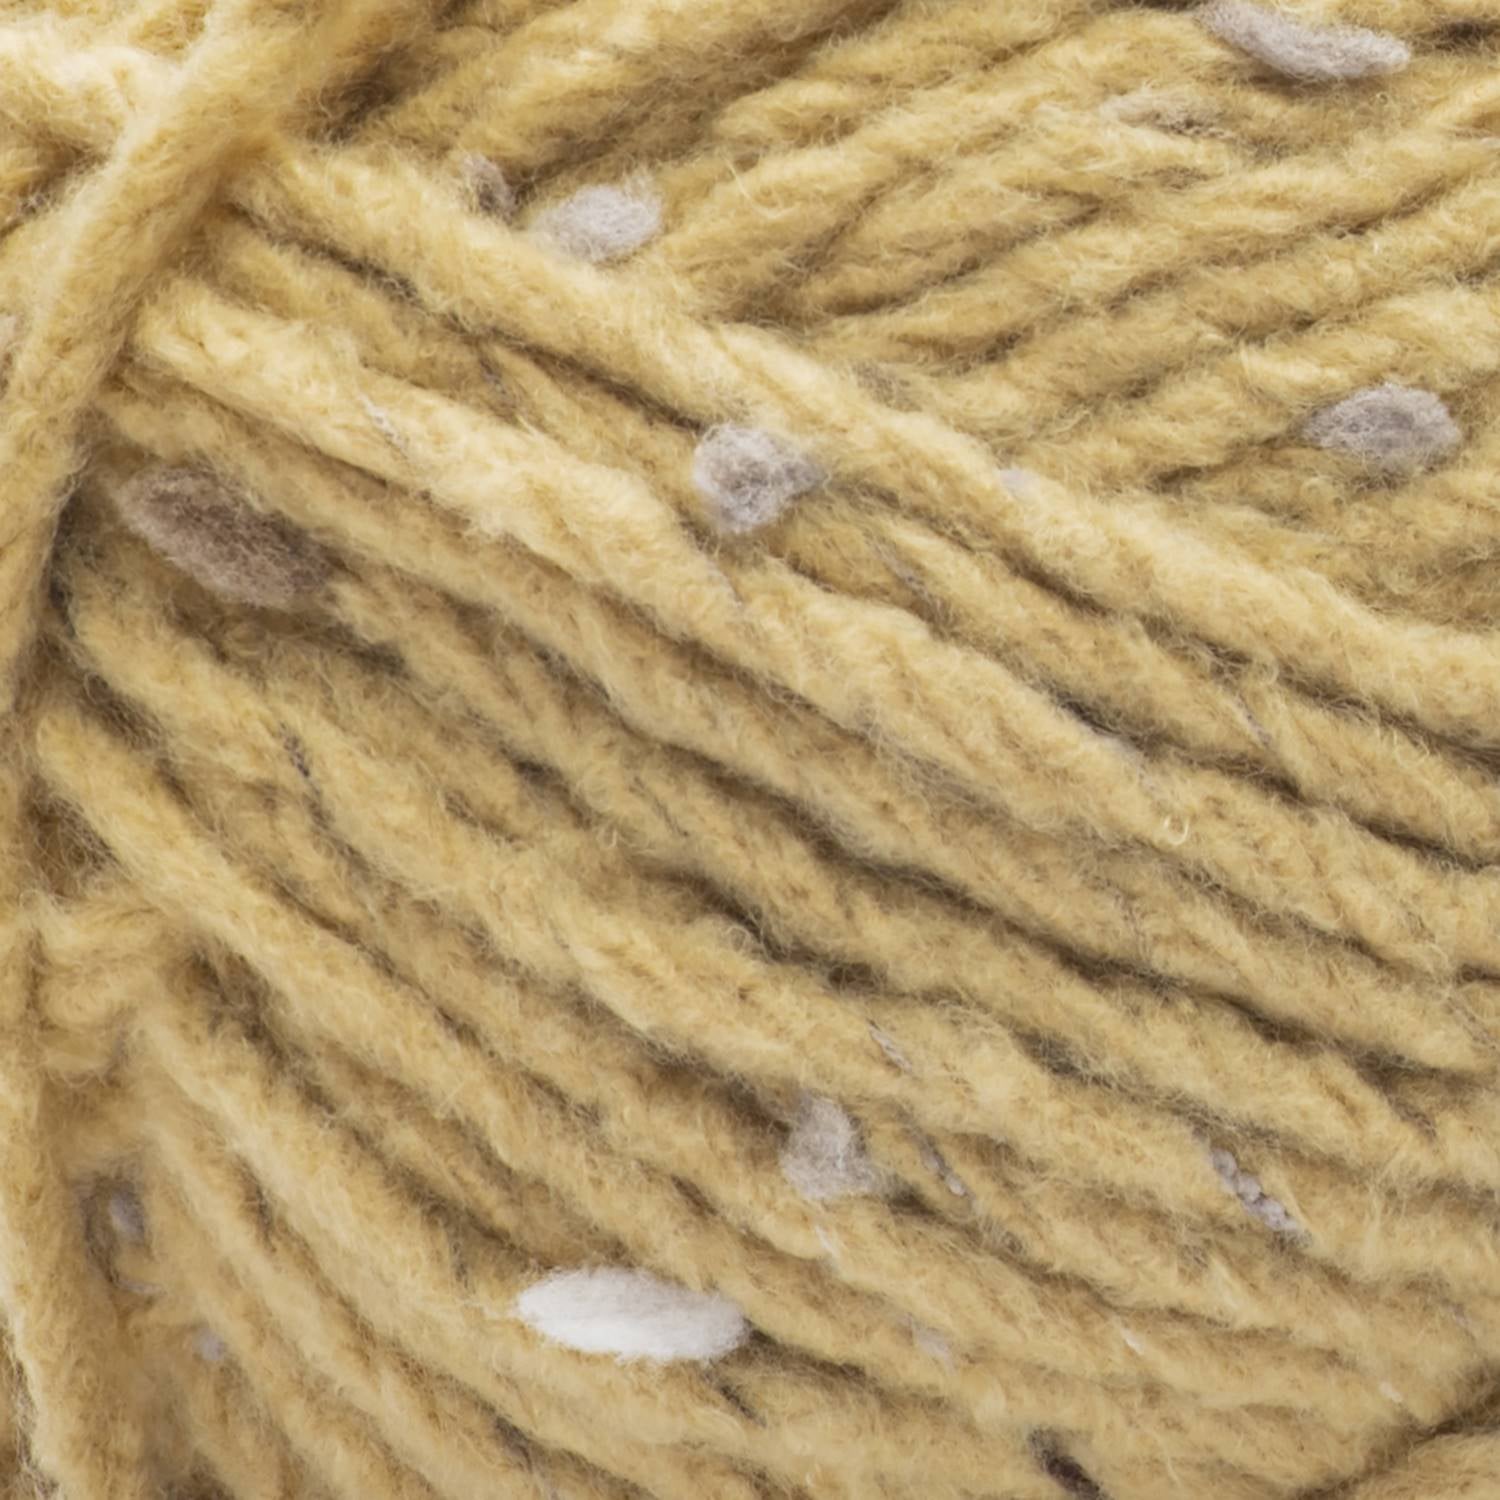 Bernat Forever Fleece Tweeds Yarn (250g/8.8oz)